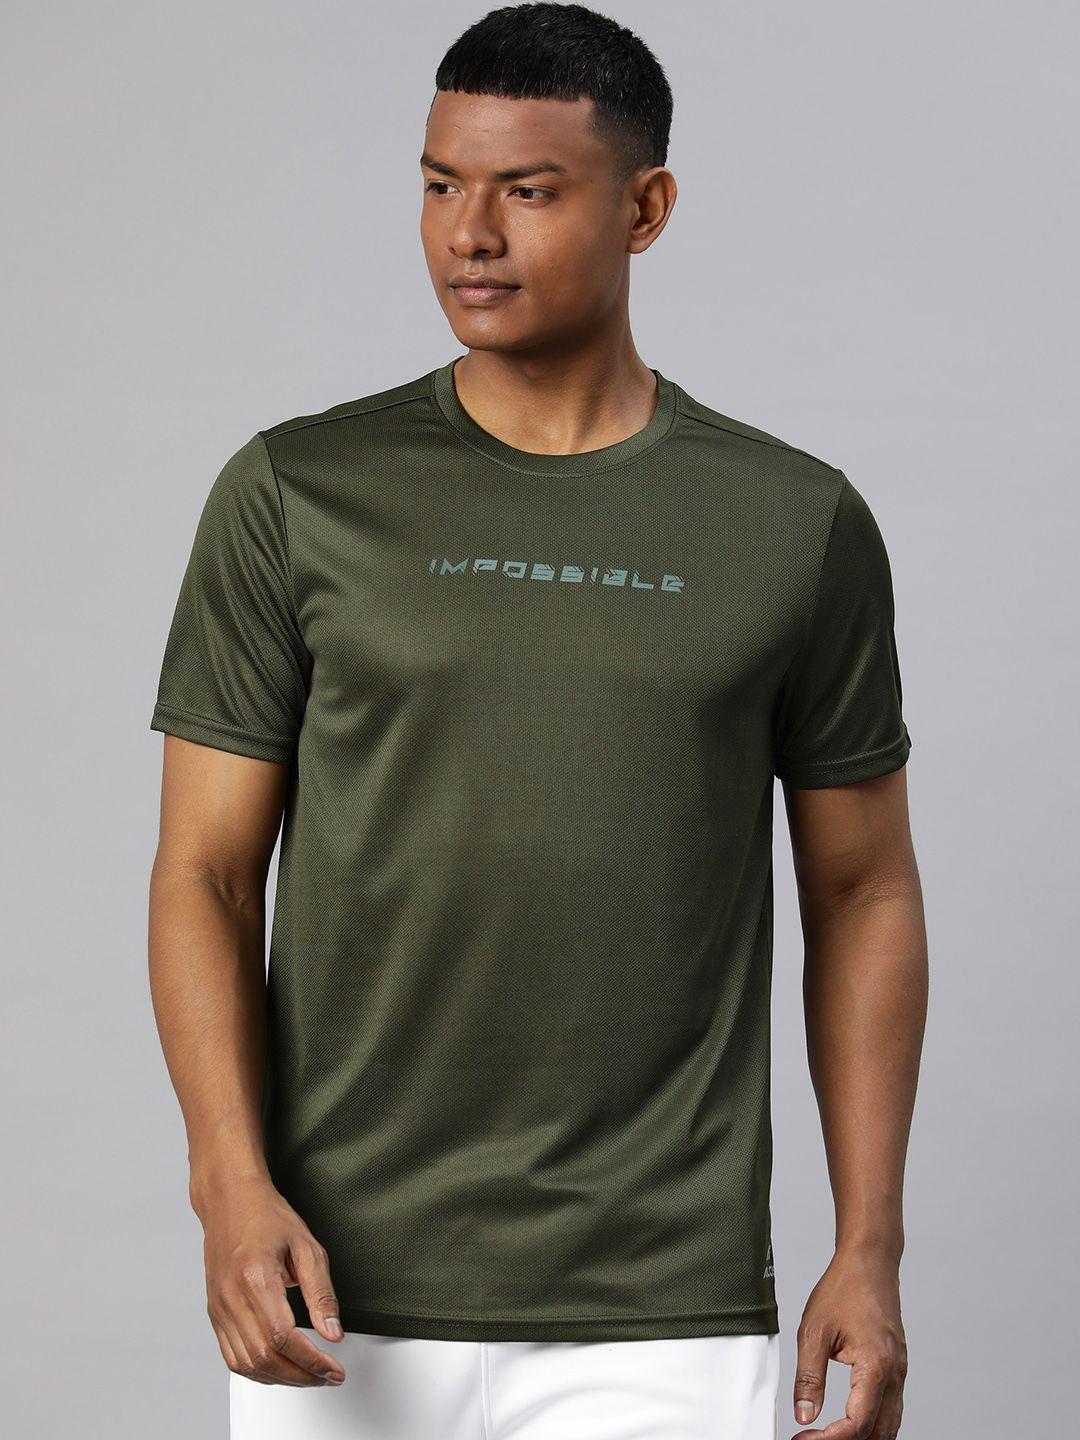 alcis-men-typography-printed-dry-tech-slim-fit-sports-t-shirt